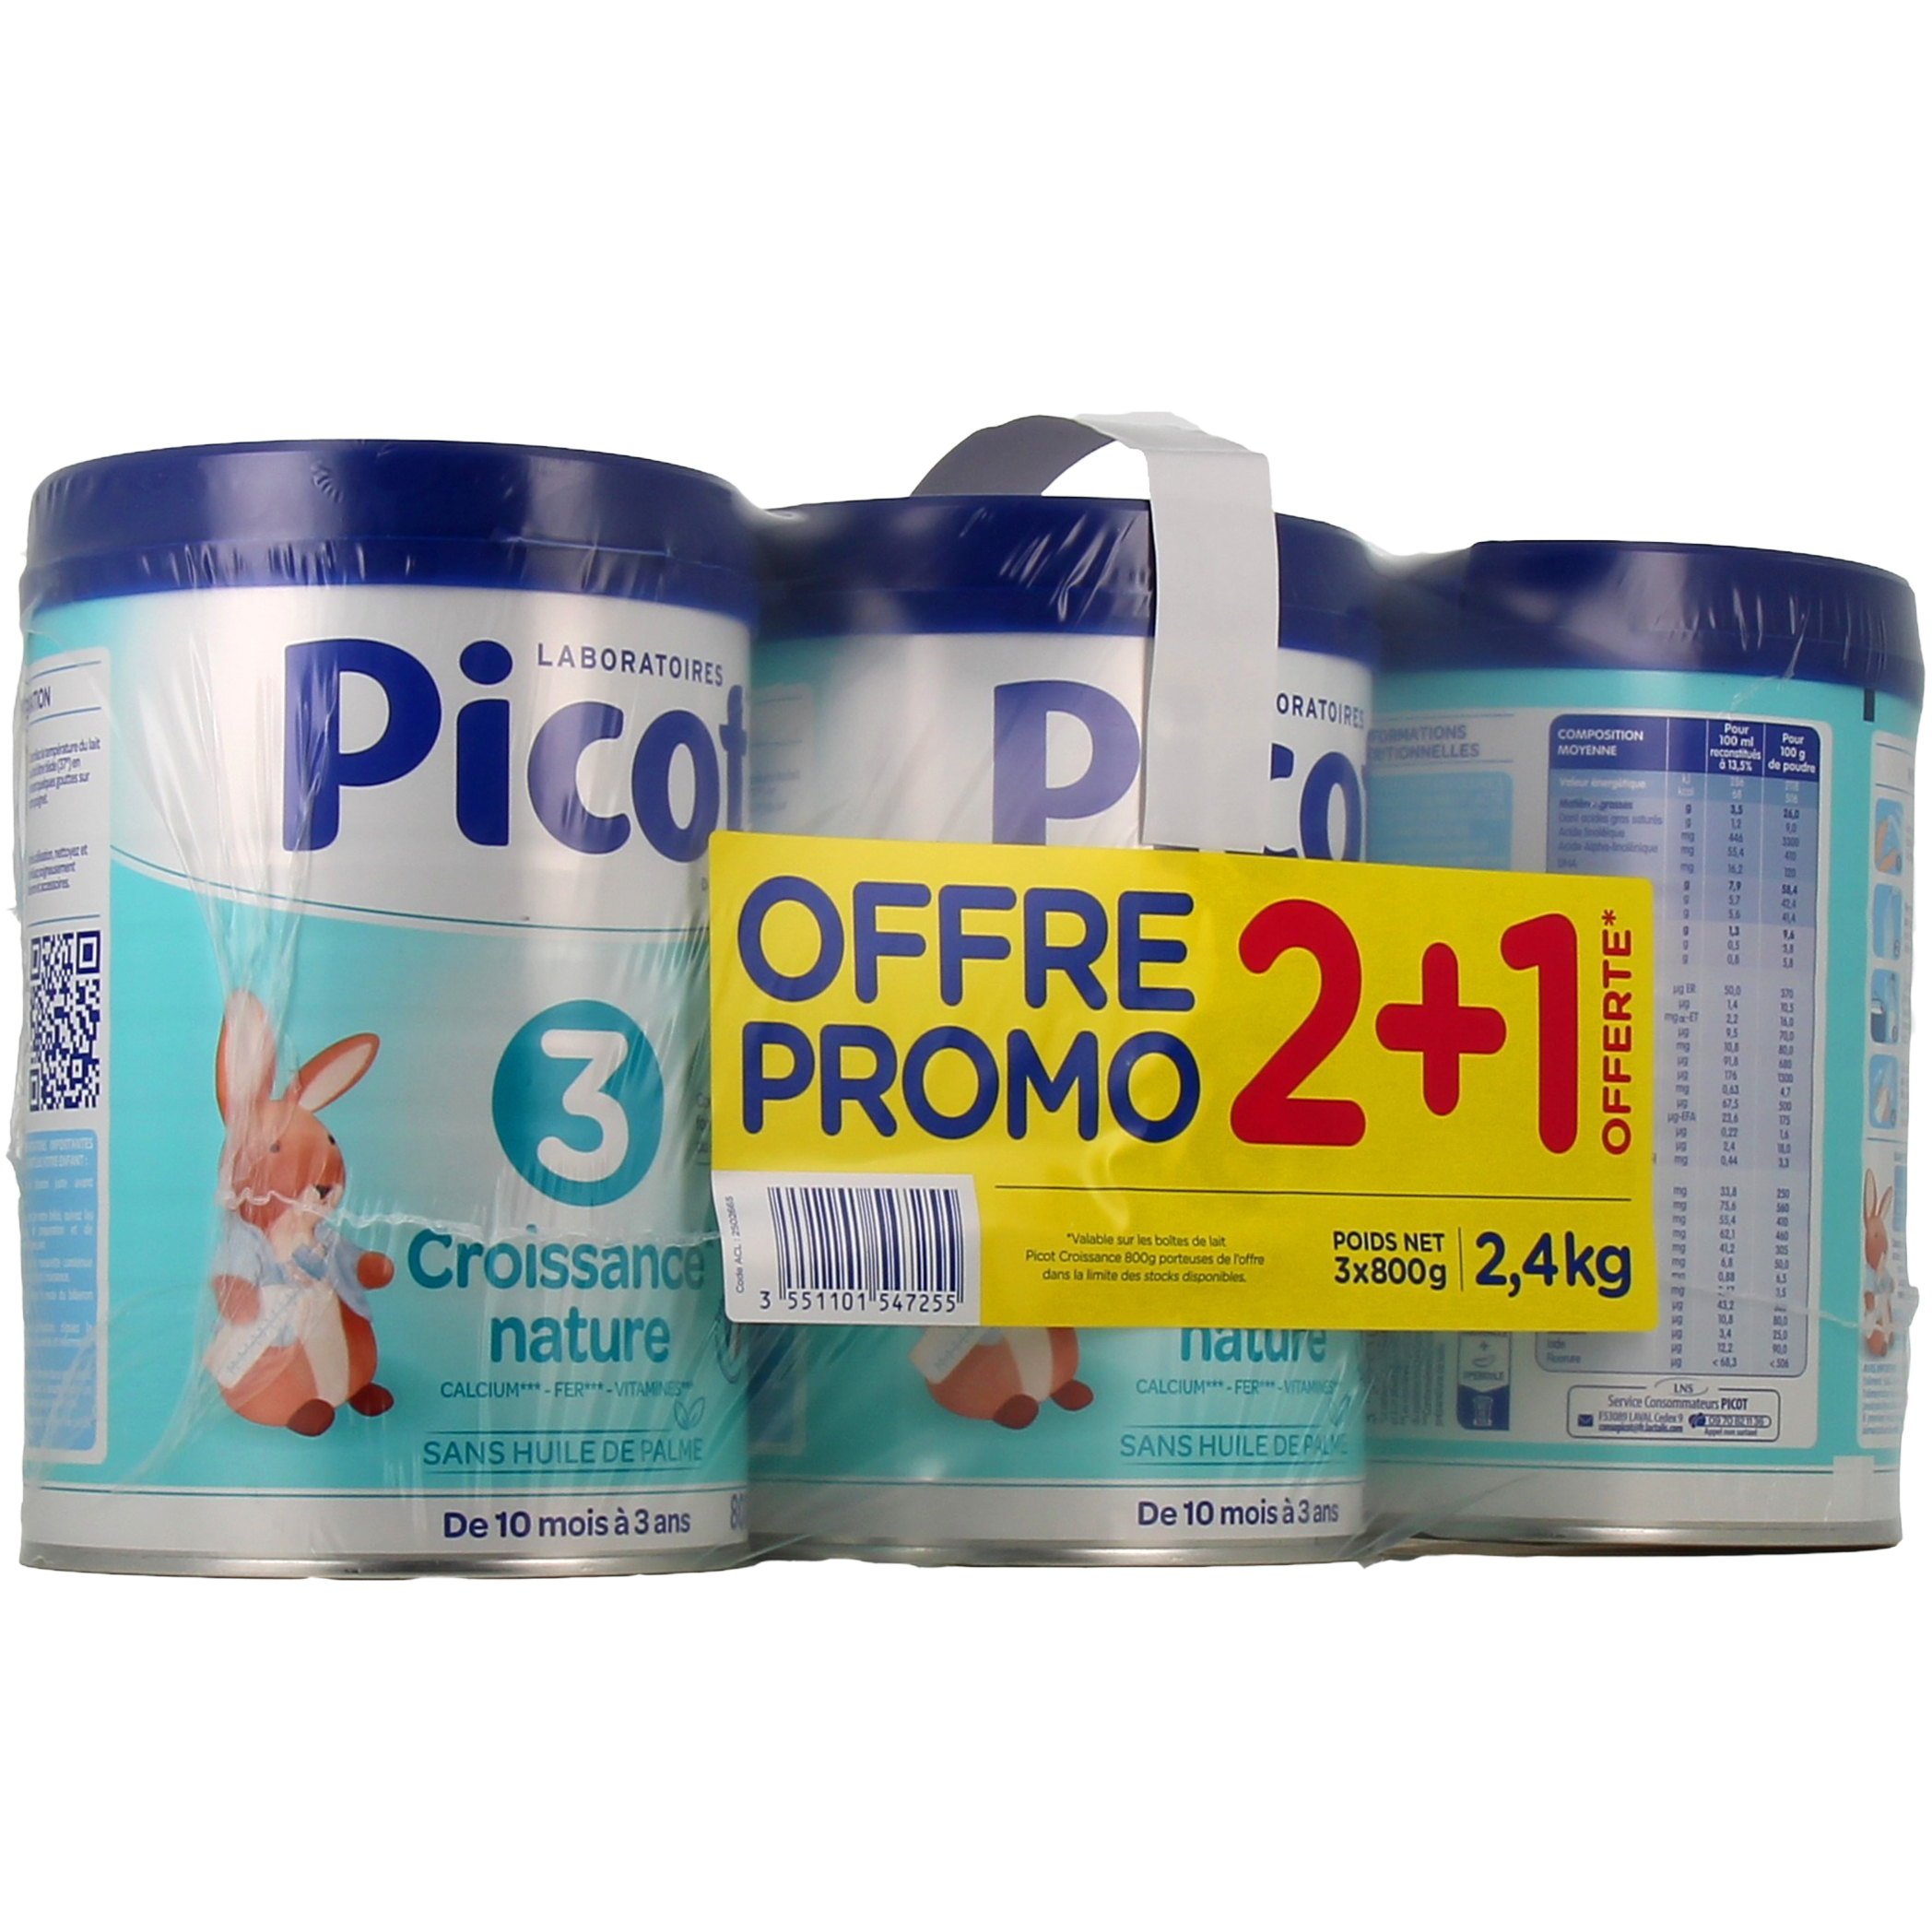 https://cdn.pharmaciedesdrakkars.com/media/images/products/picot-3-lait-3eme-age-croissance-nature-picot4-1693923391.jpg